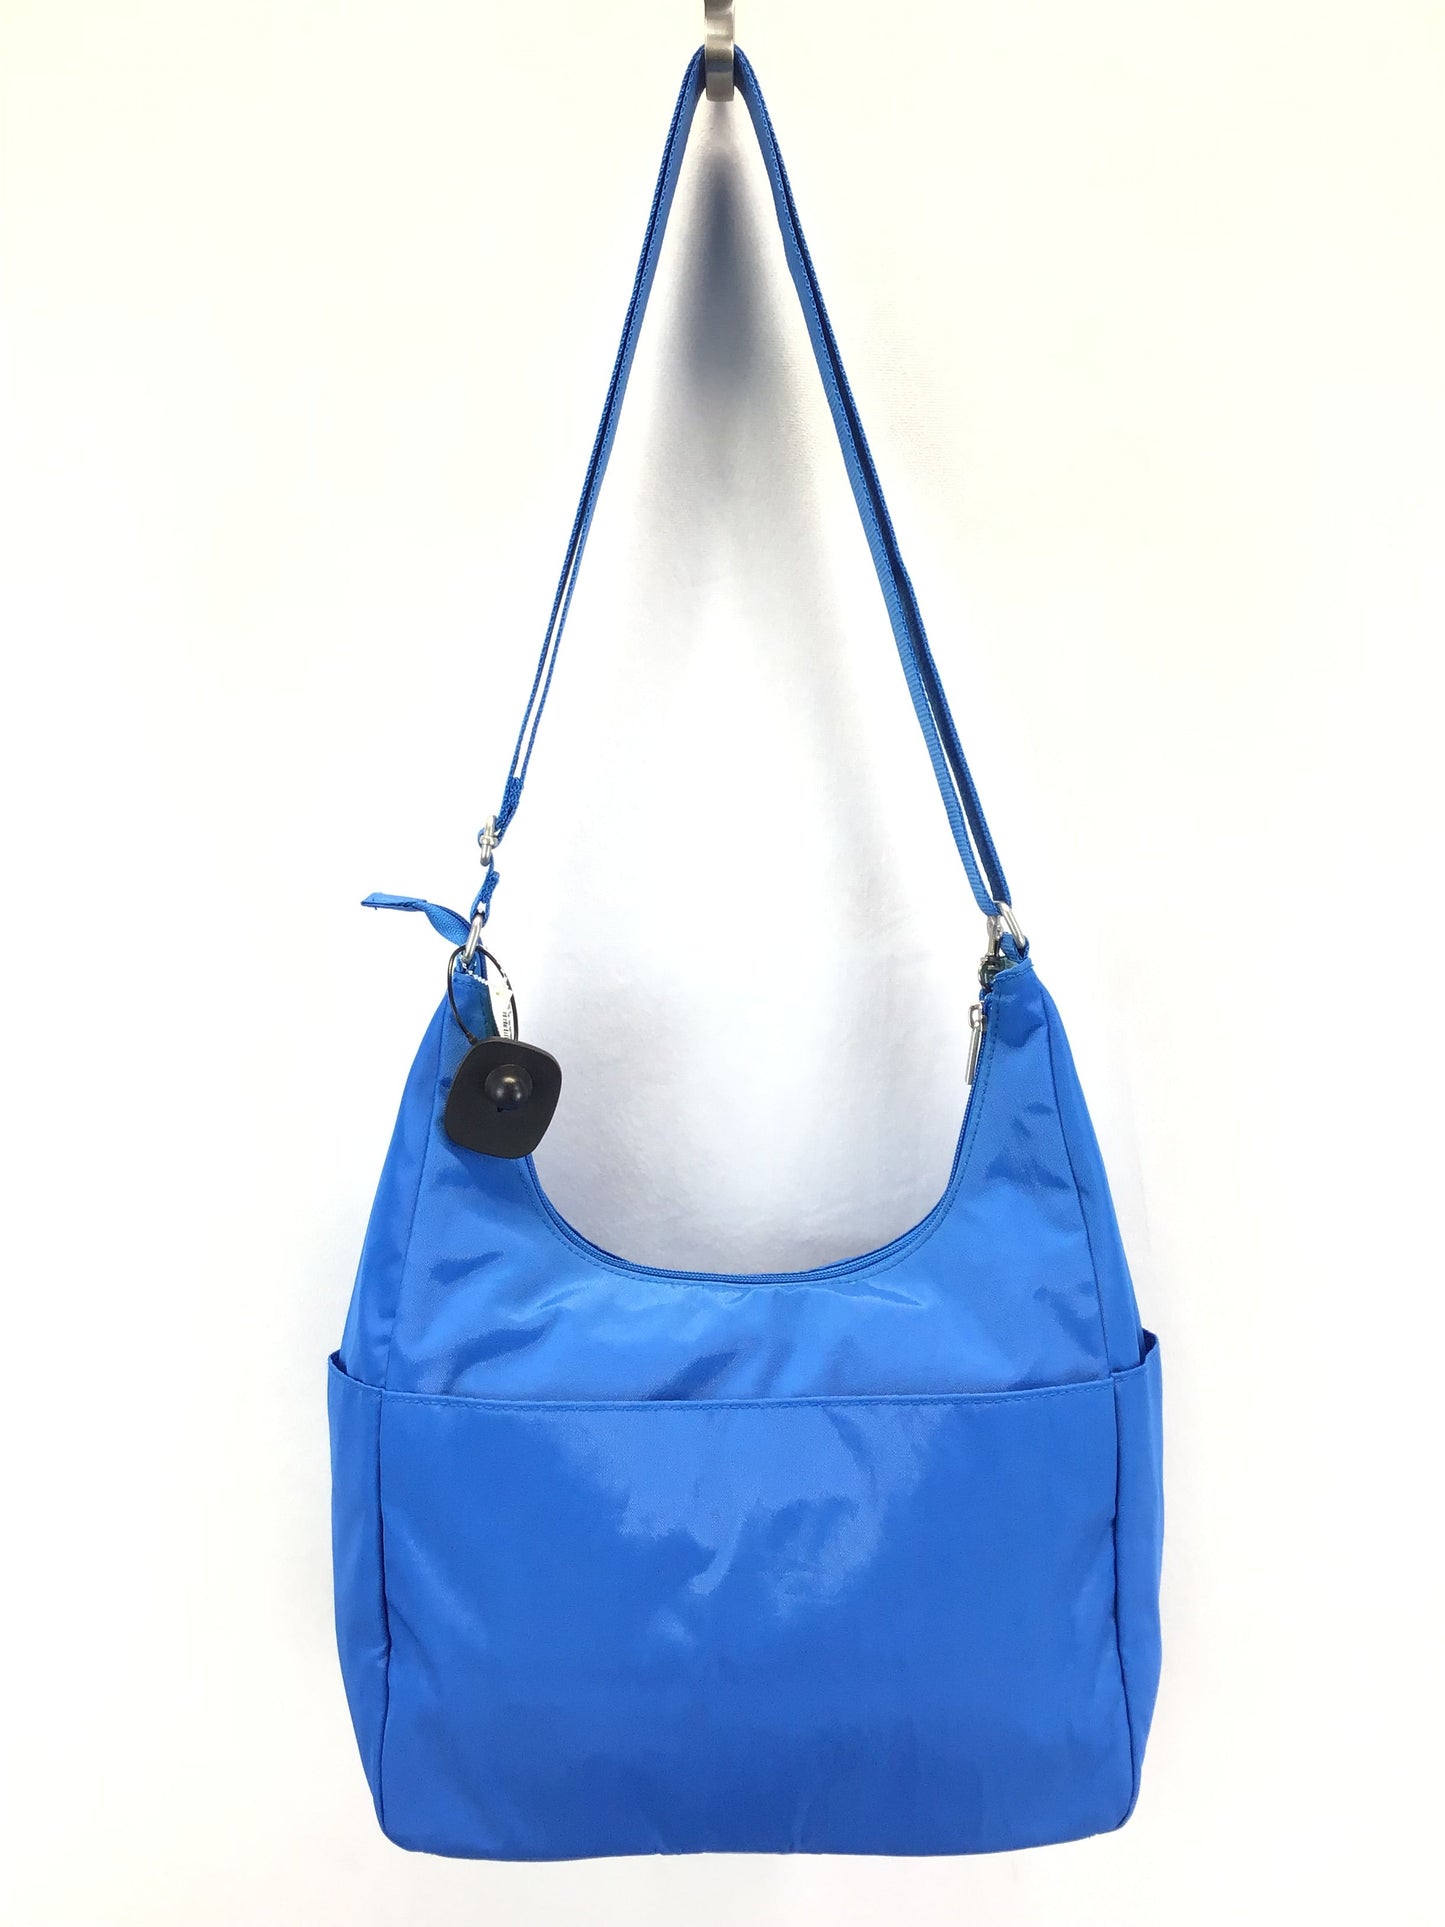 Handbag By Baggallini  Size: Large